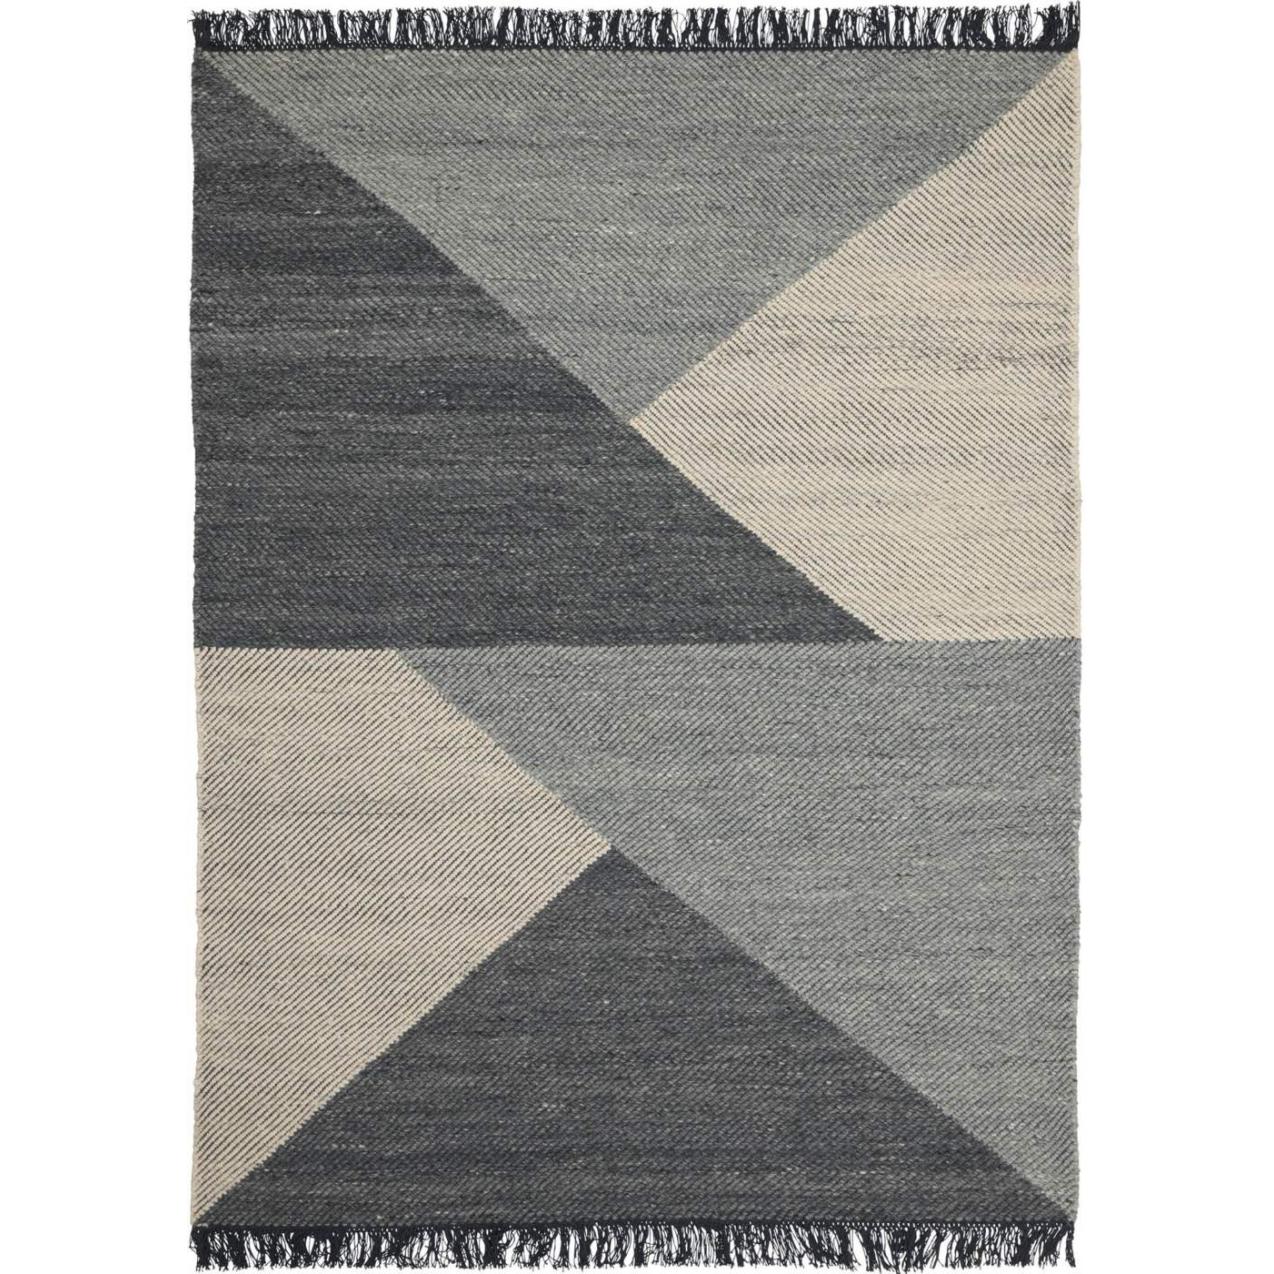 Linie Design Skuld rug // Skuld szőnyeg